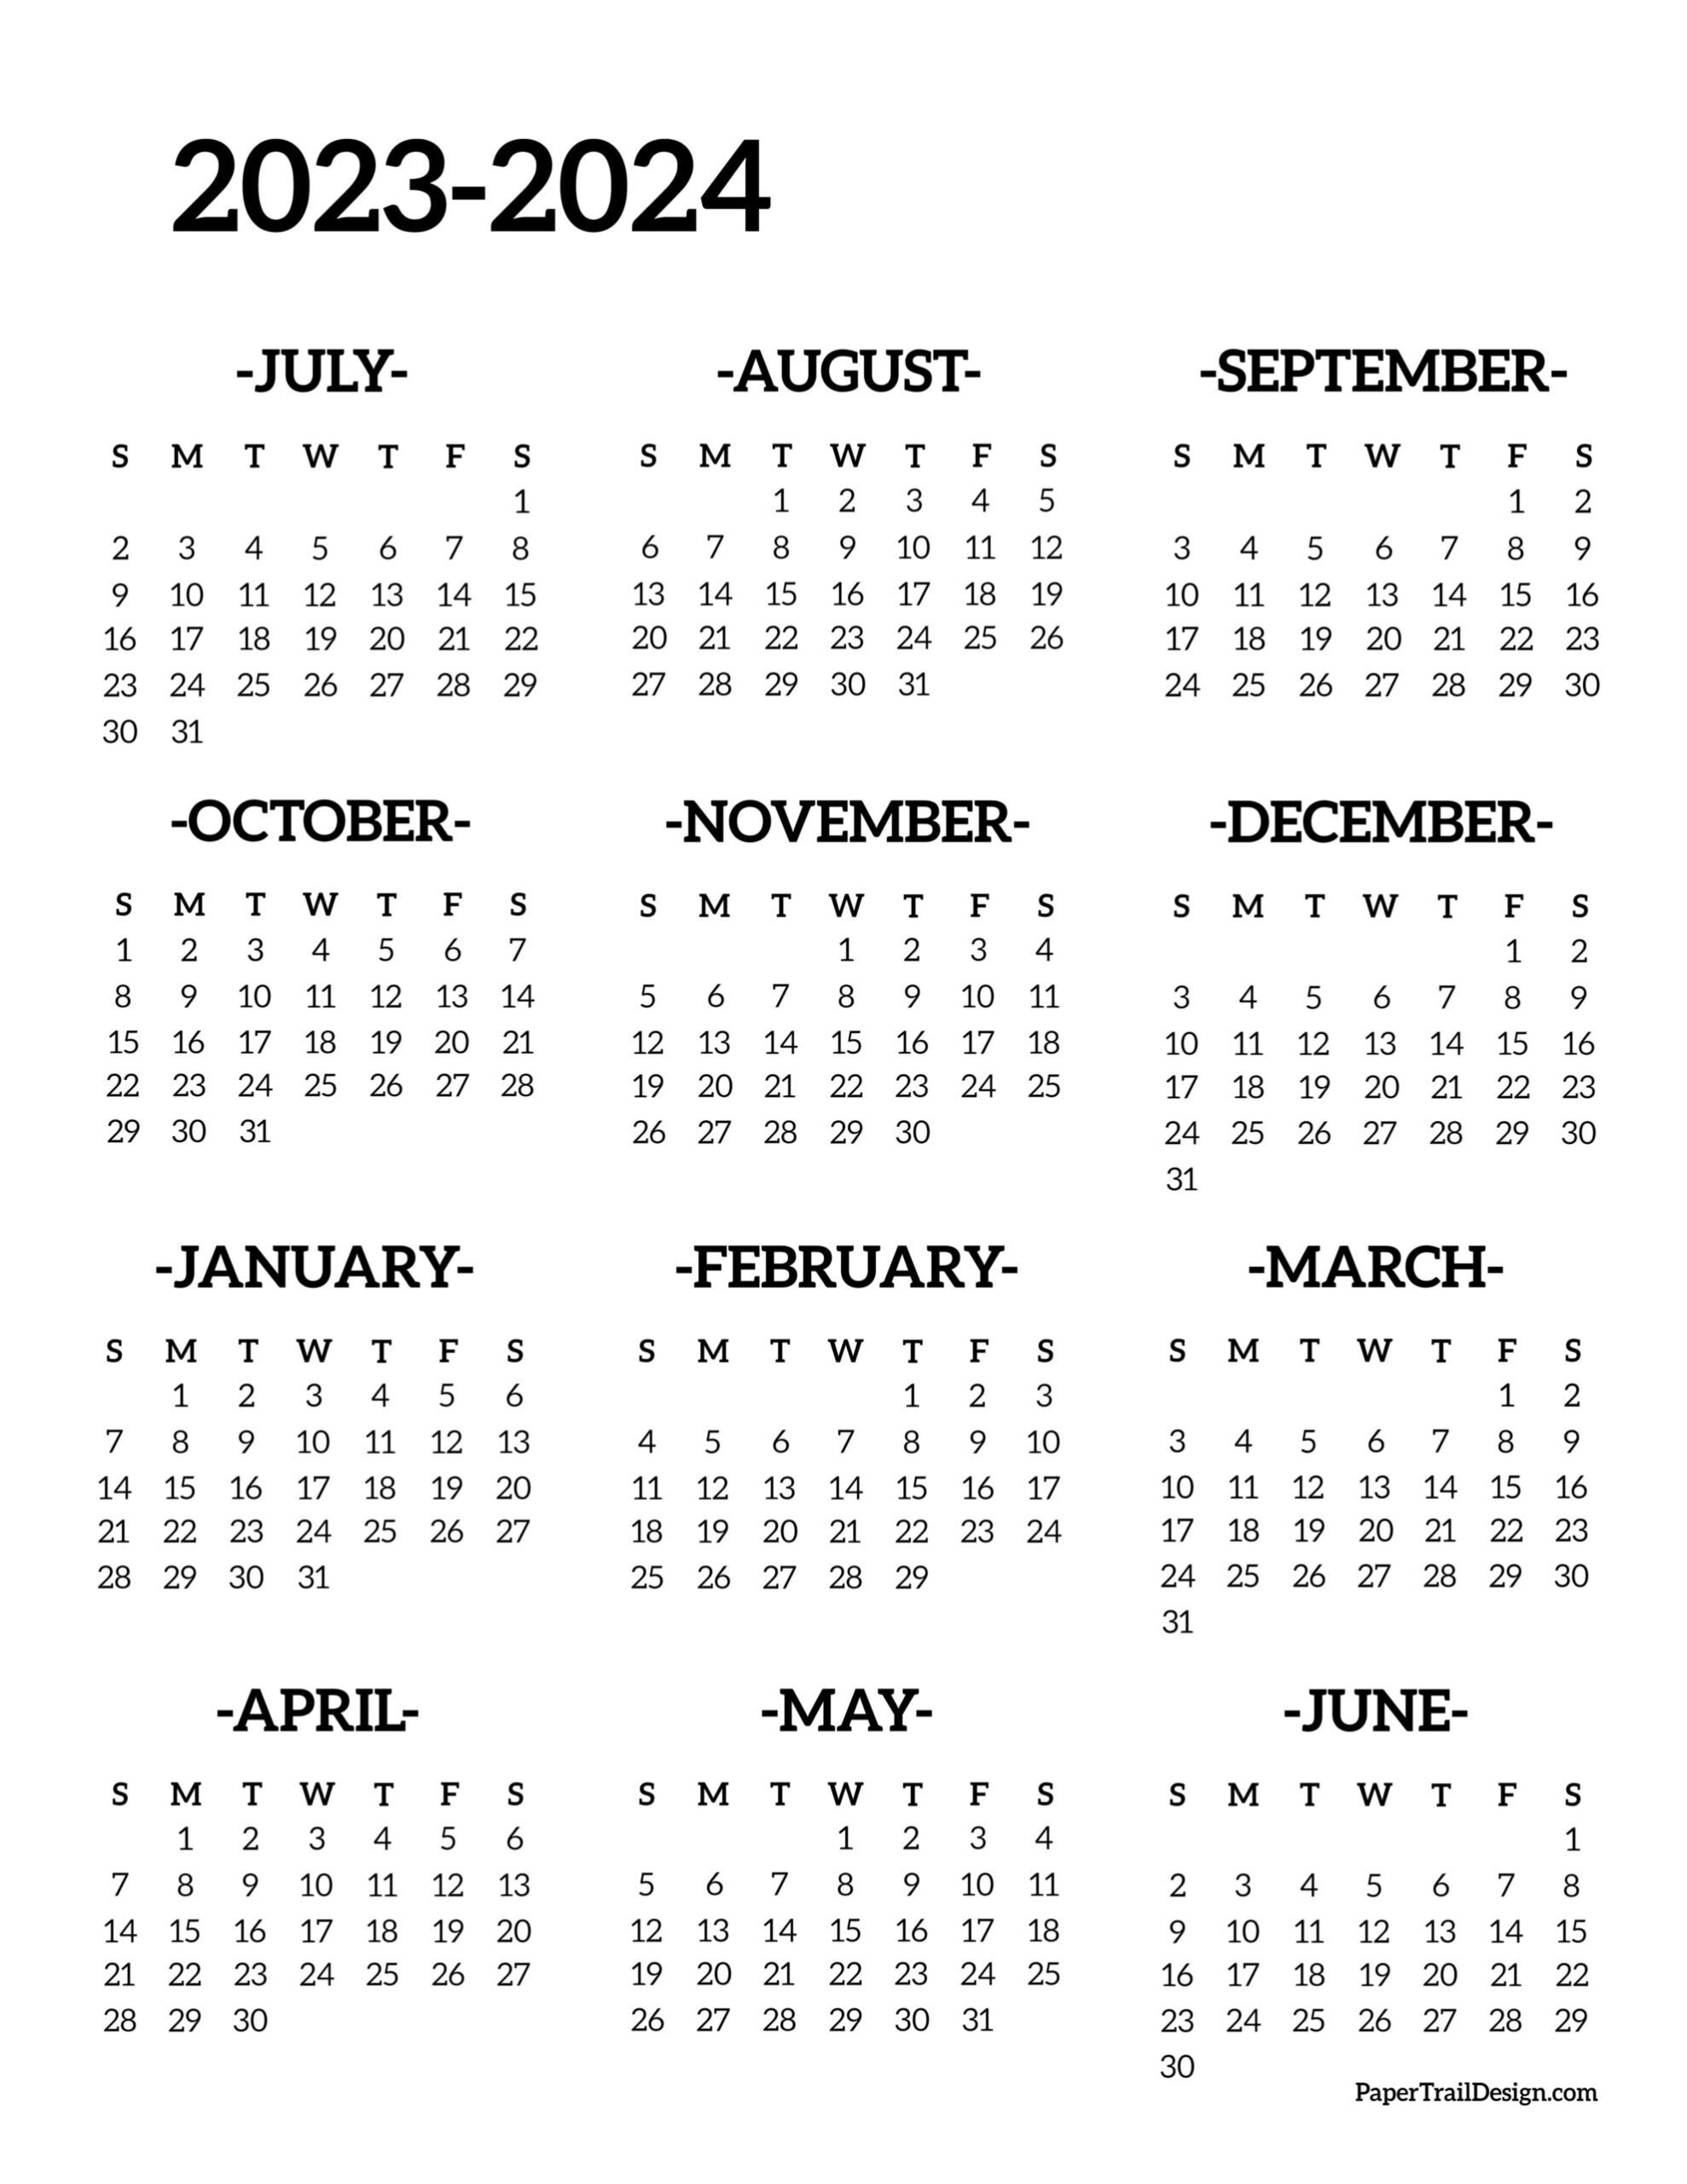 2023-2024 School Year Calendar Free Printable - Paper Trail Design | Free Printable Academic Calendar 2023 2024